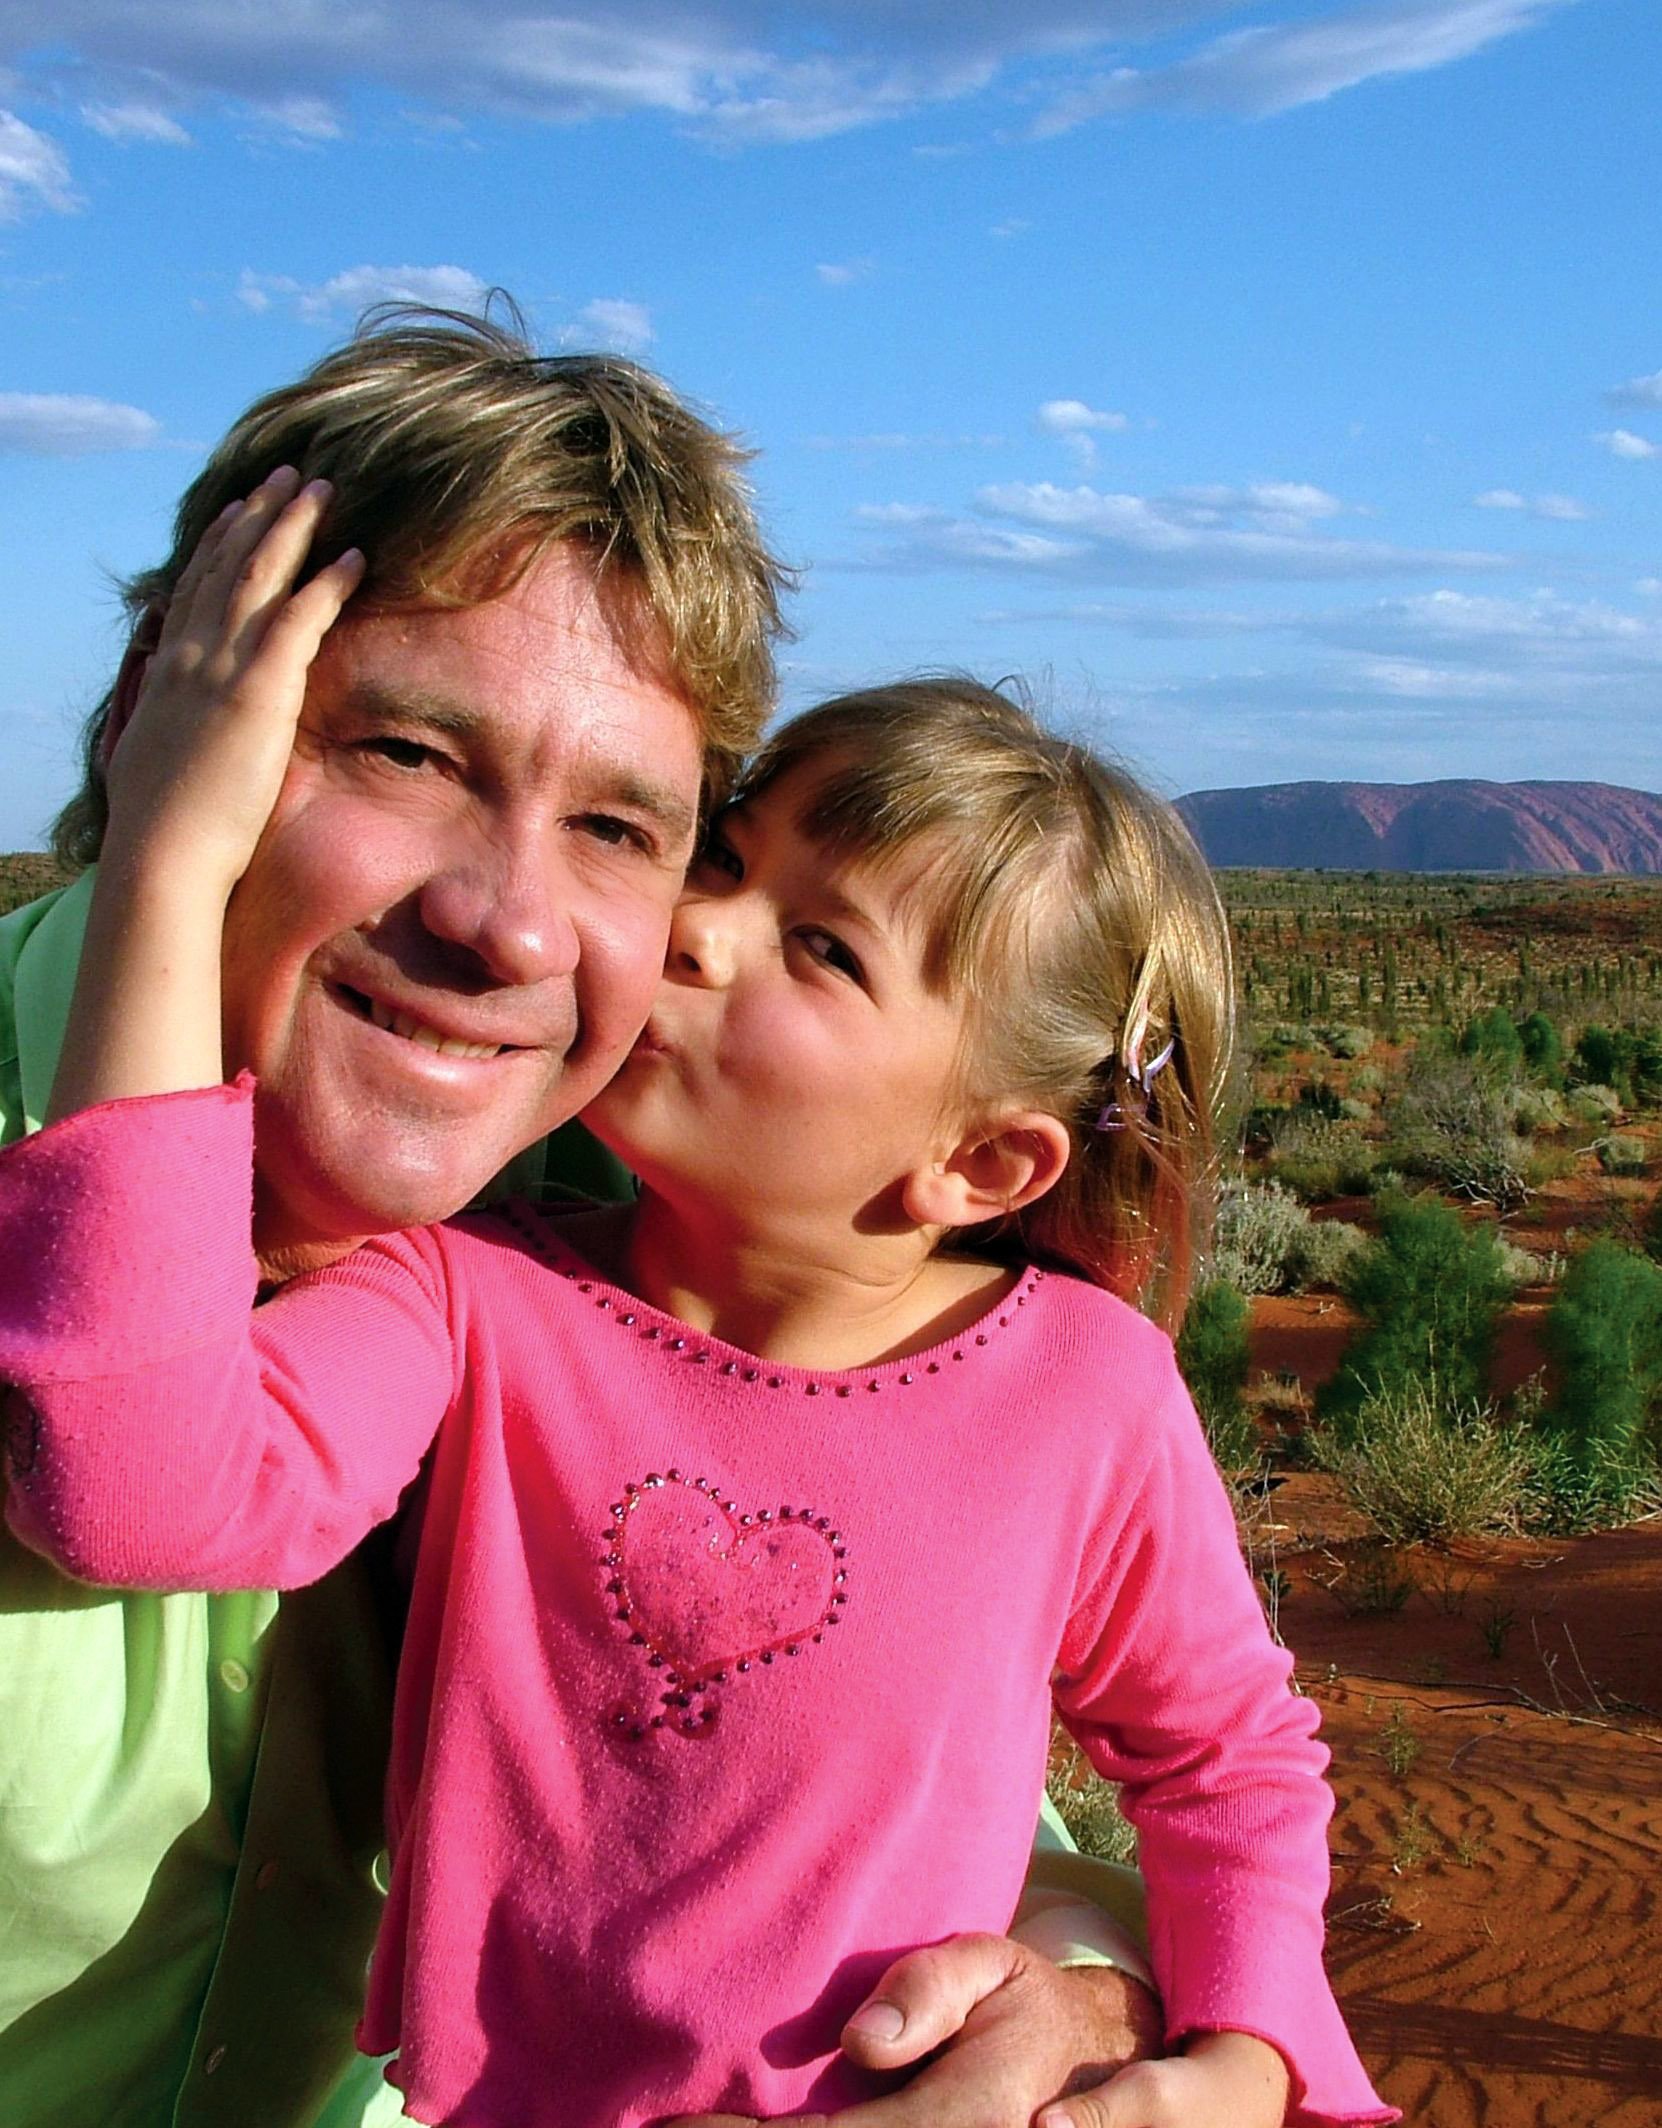  Steve Irwin poses with his daughter Bindi Irwin on October 2, 2006, in Uluru, Australia. | Source: Getty Images.